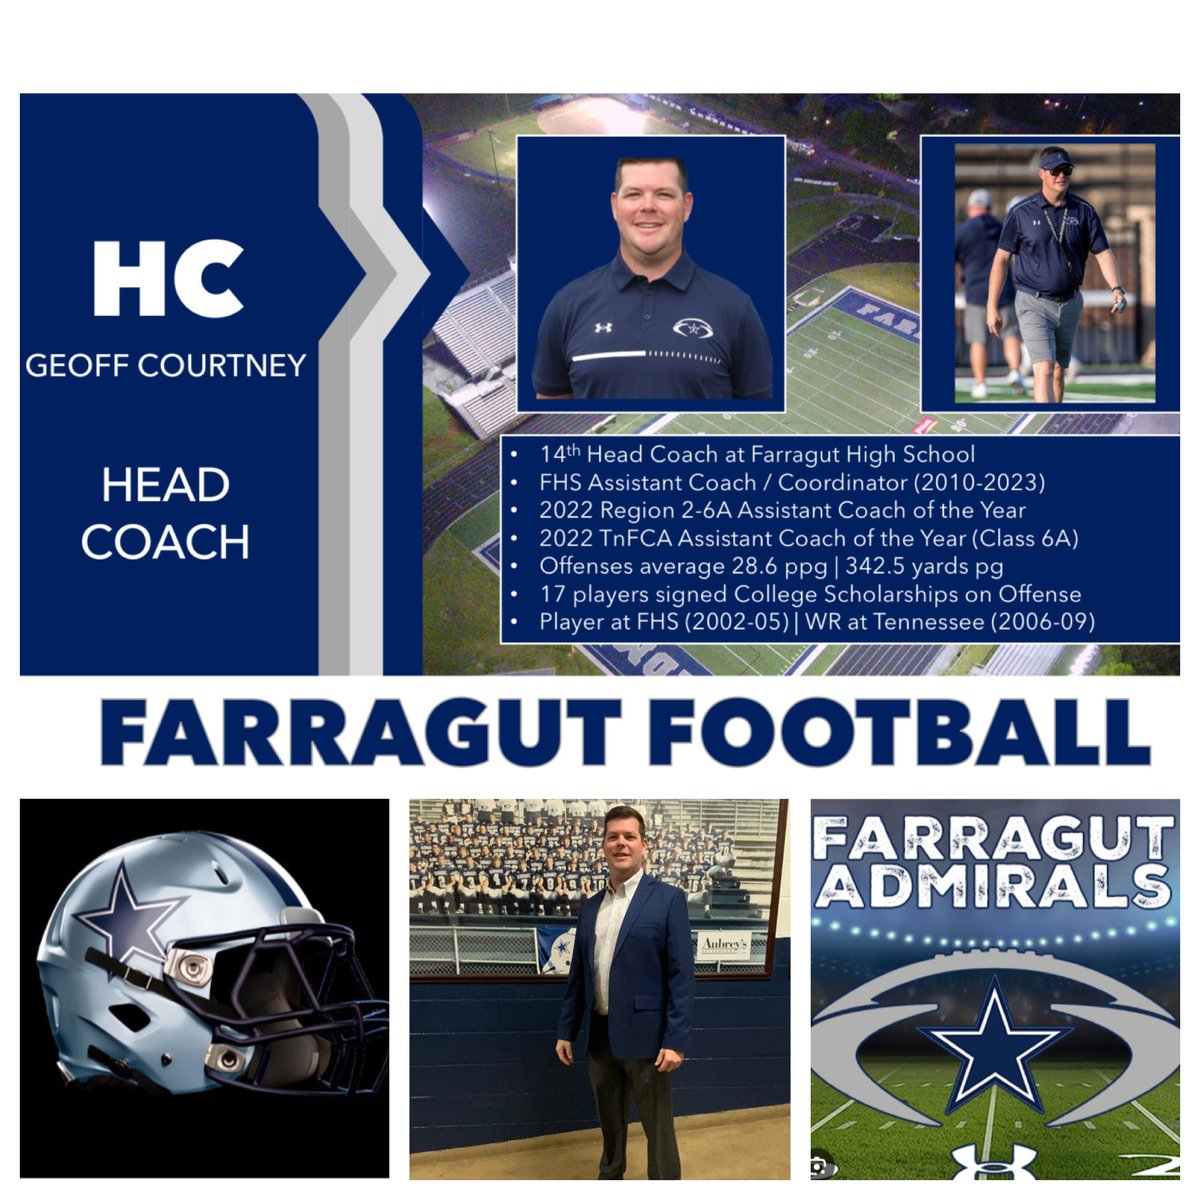 Introducing our new Head Football Coach at Farragut High School GEOFF COURTNEY! ⚓️🏈 ⁦@WATESports⁩ ⁦@WBIRSports⁩ ⁦@wvltrick⁩ ⁦@5StarPreps⁩ ⁦@prepxtra⁩ ⁦@TJ3rd_⁩ ⁦@FarragutFB⁩ ⁦@Packer_sports⁩ ⁦@West105_WFIV⁩